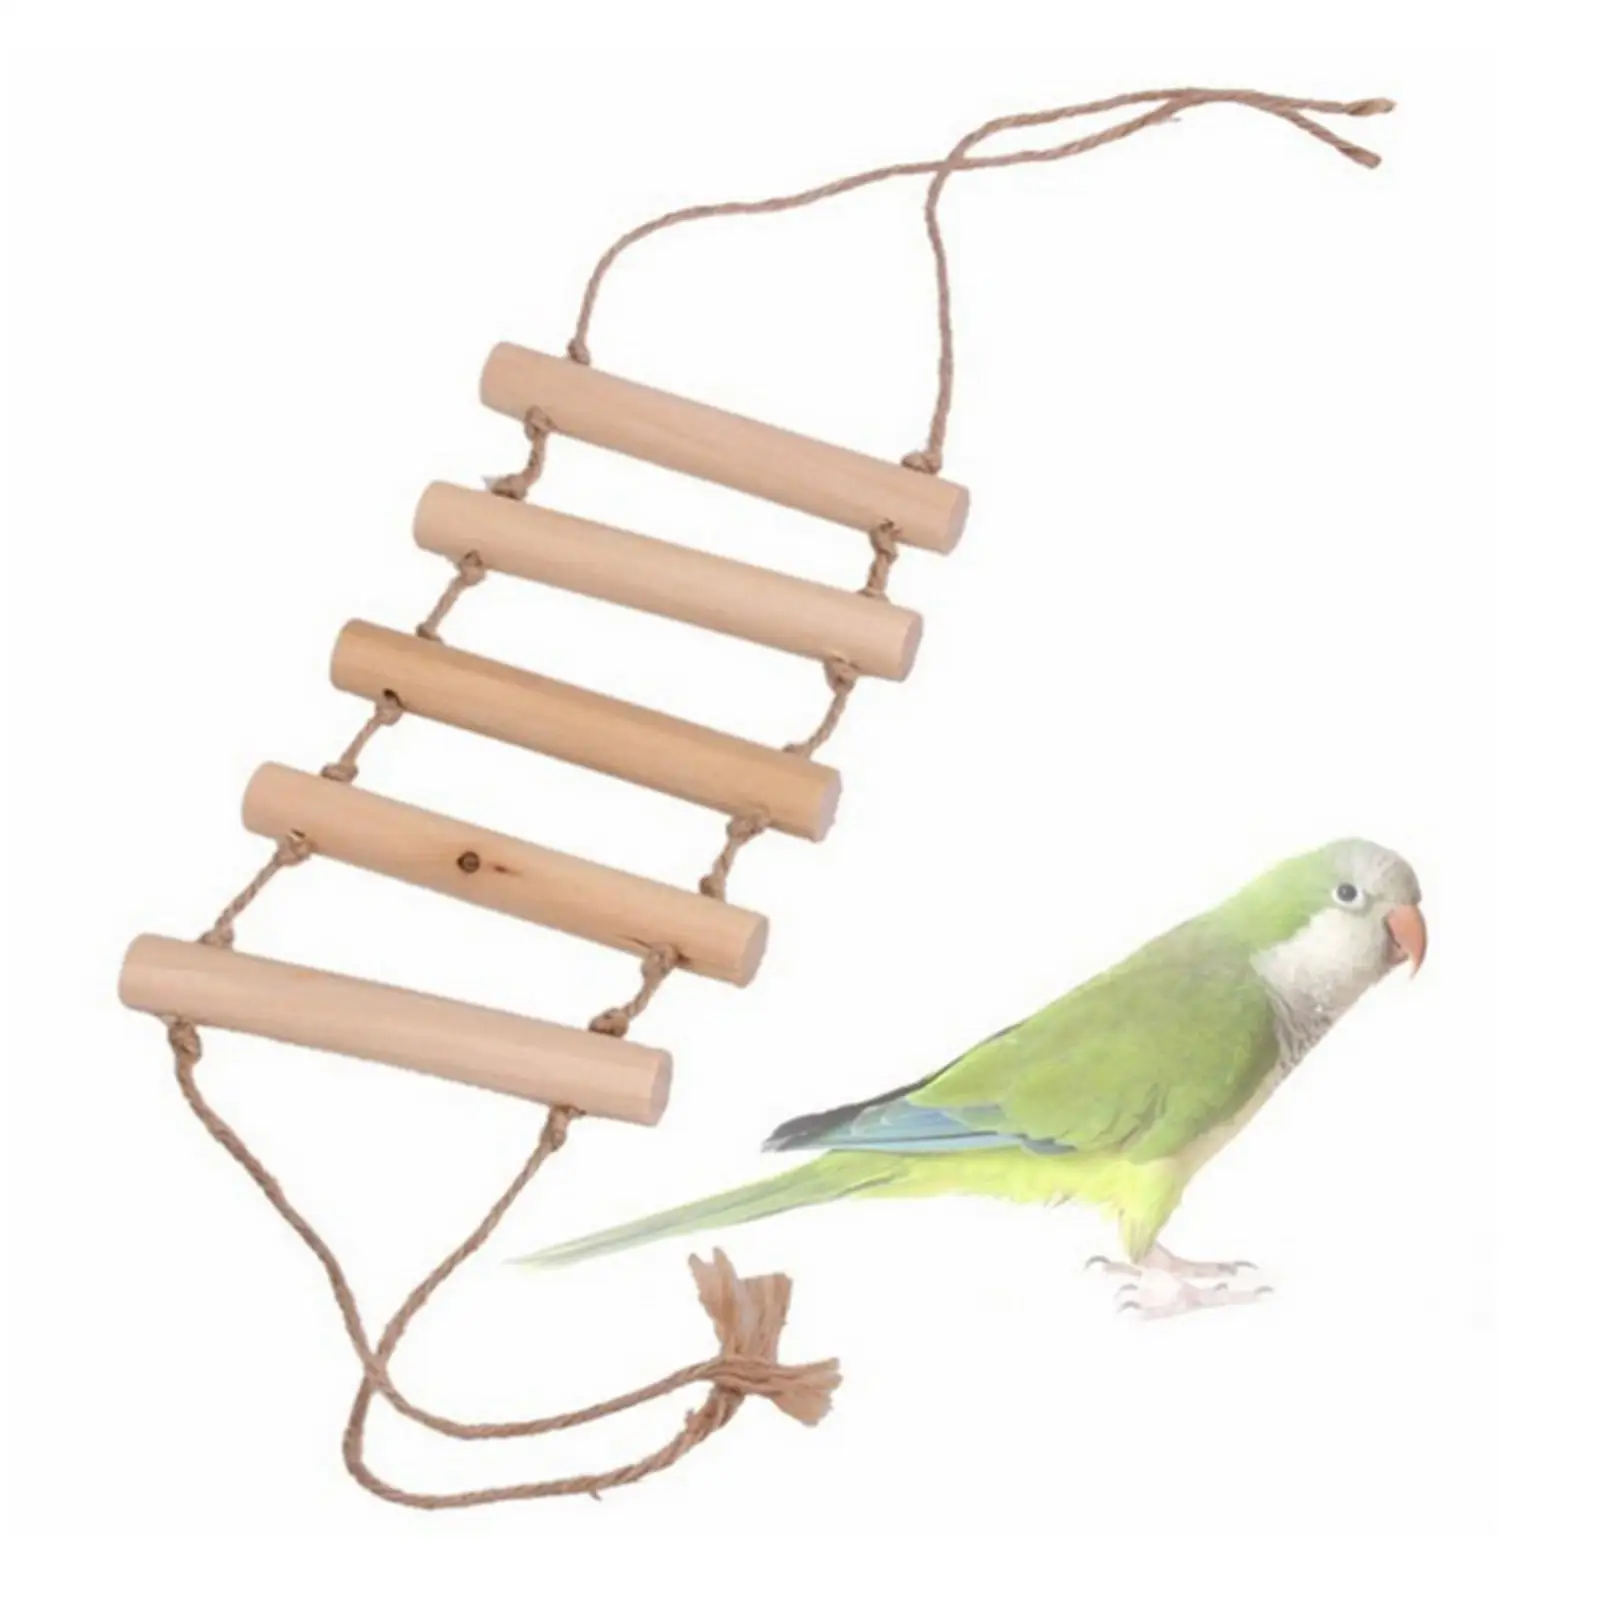 5 Floor Parrot Swing Climbing Chewing Bite Birds Bridge Ladder for Lovebird Conures Cockatiels Small Medium Large Birds Training